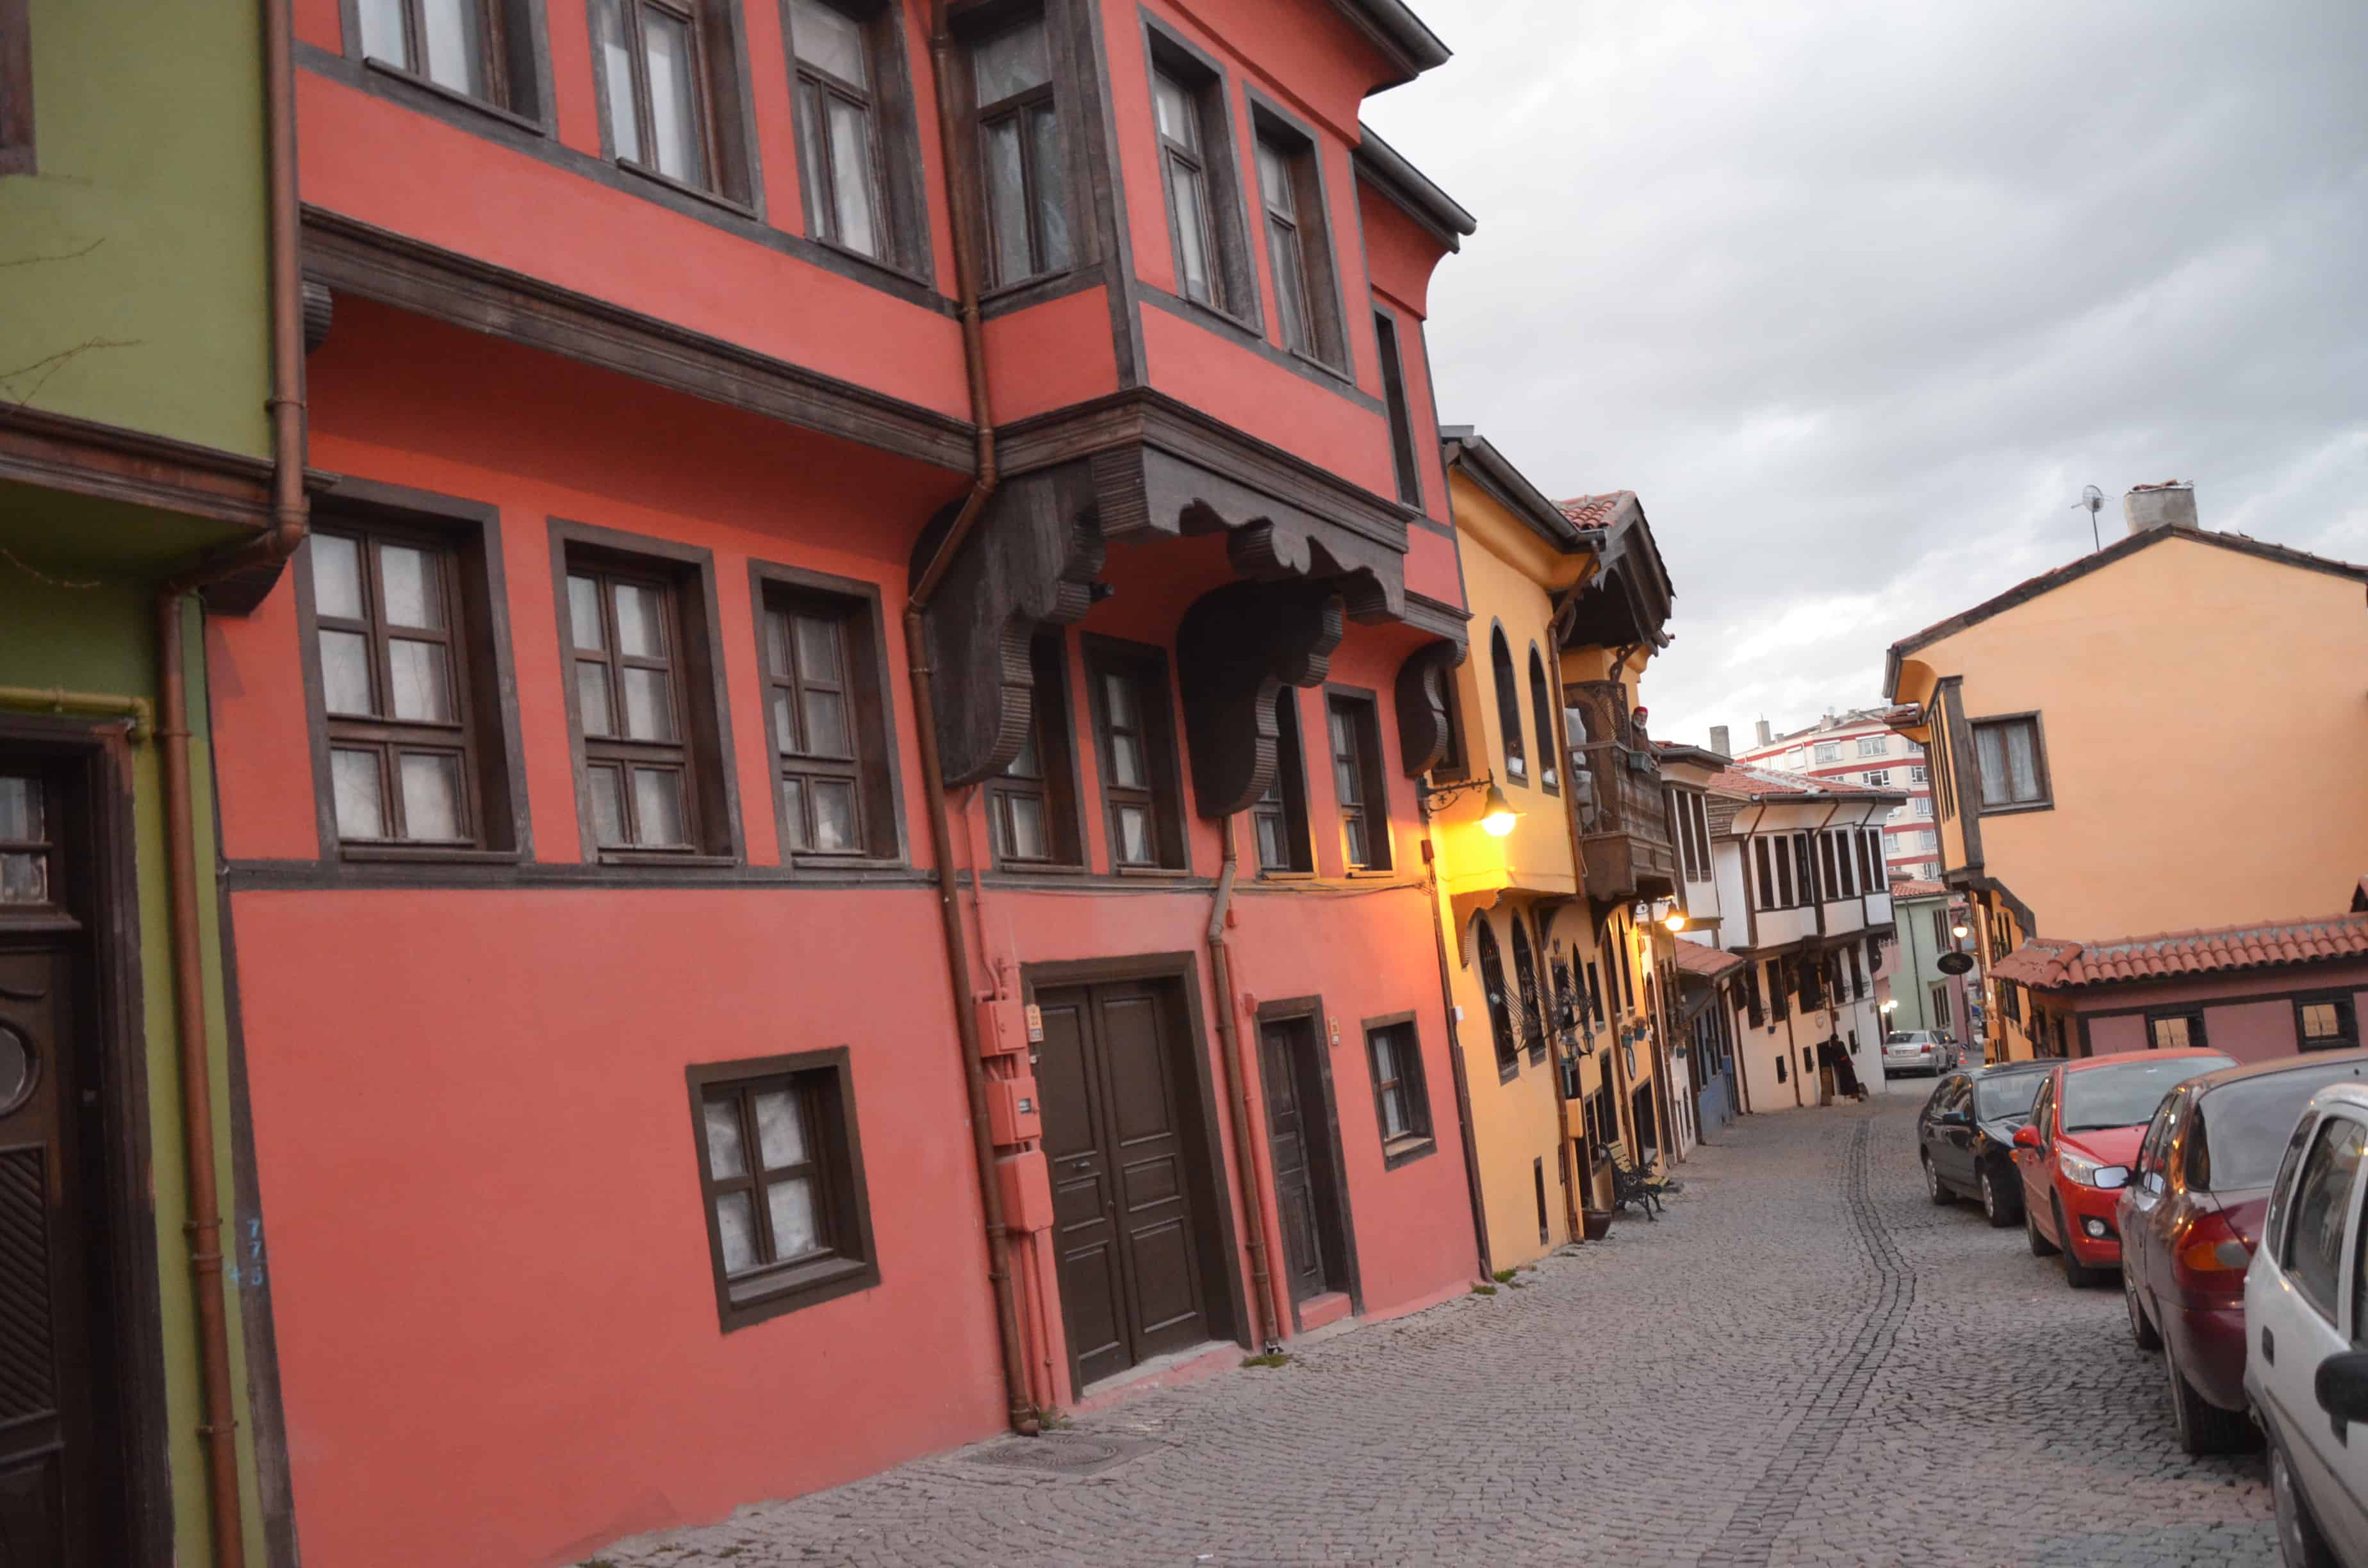 Ottoman homes in Odunpazarı in Eskişehir, Turkey